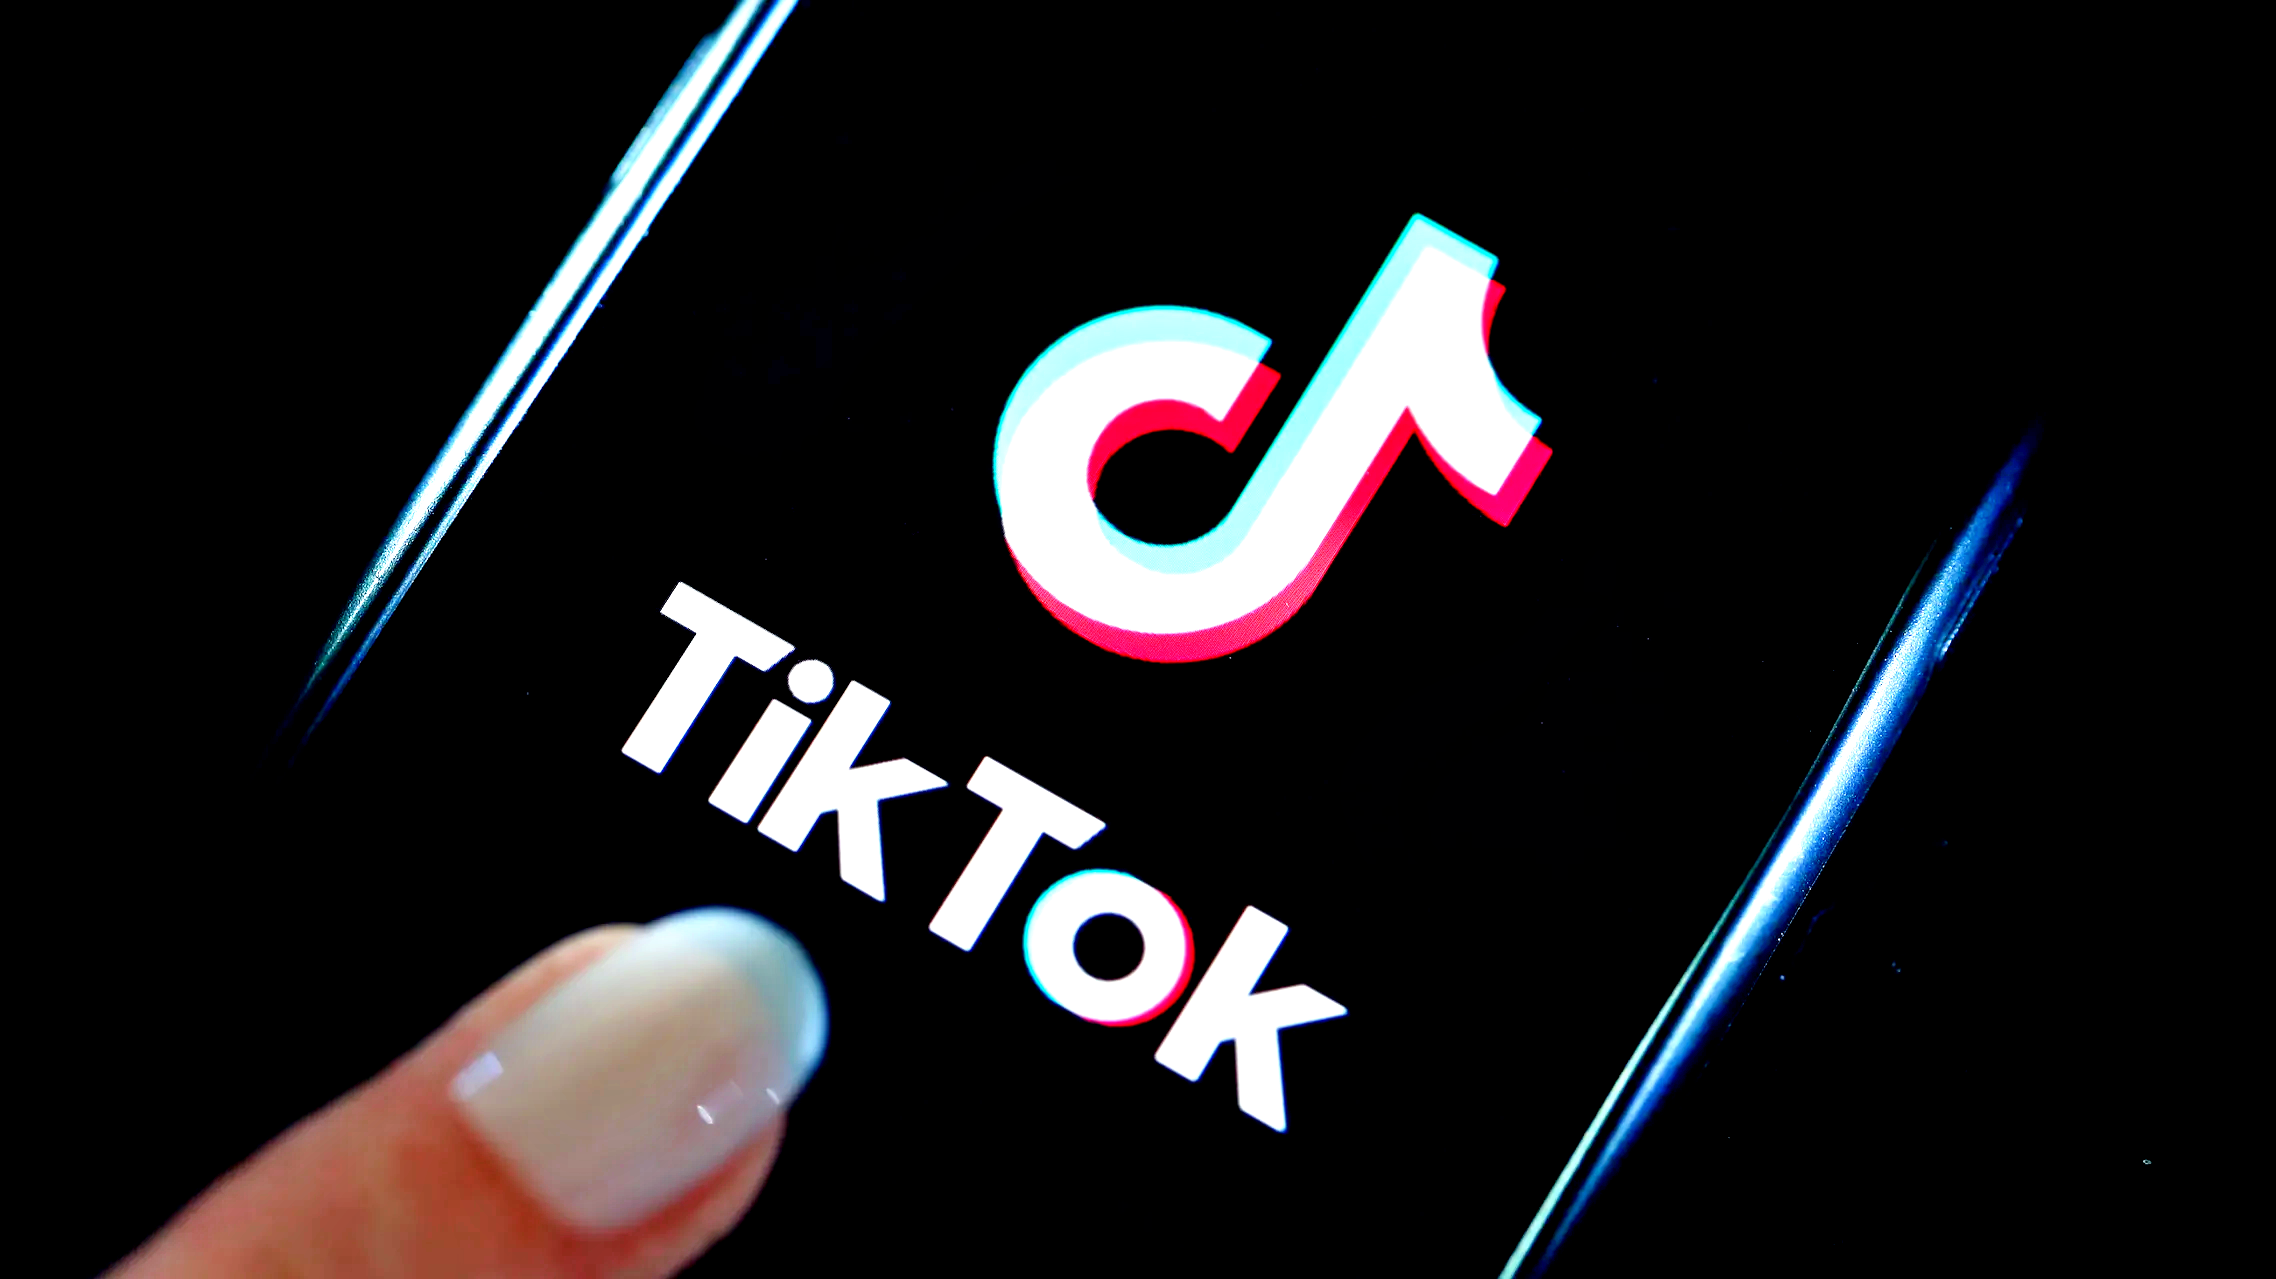 “TikTok, privacy minori a rischio”: Garante avvia procedimento